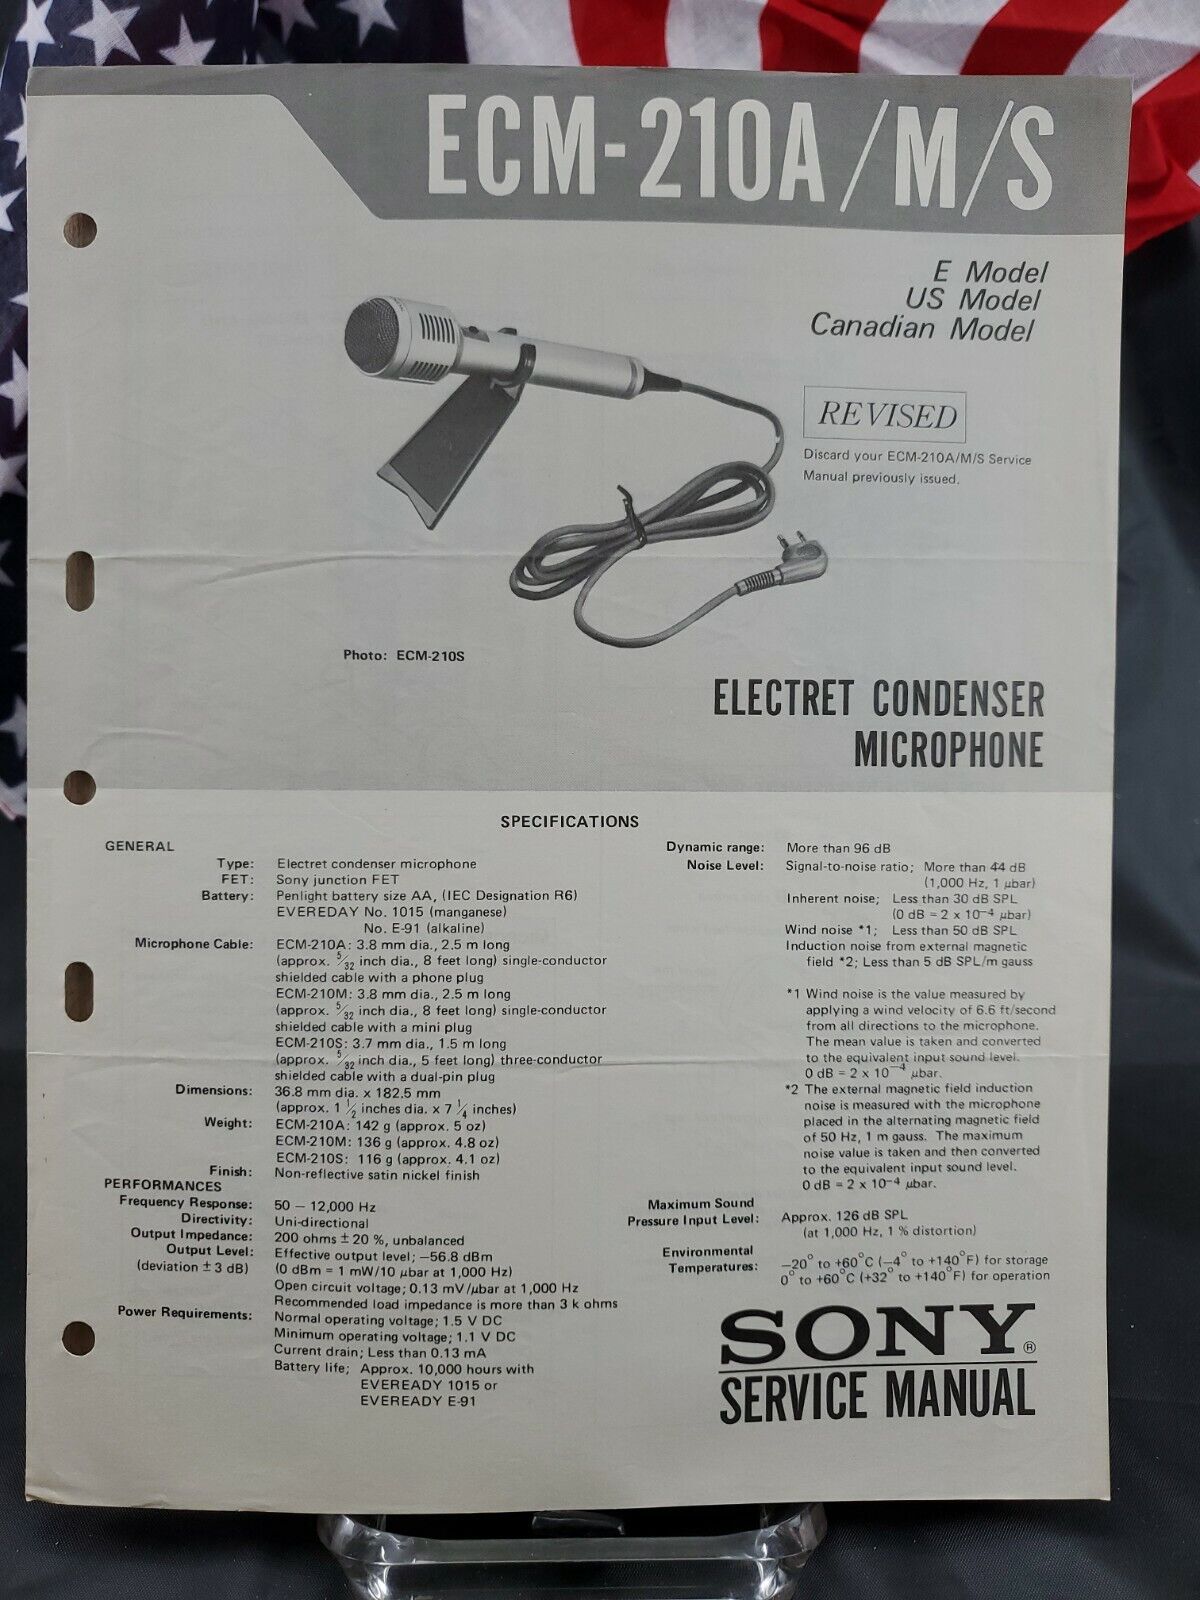 Original Sony Service Manual 1978 Electret Condenser Microphone ECM-210A/M/S